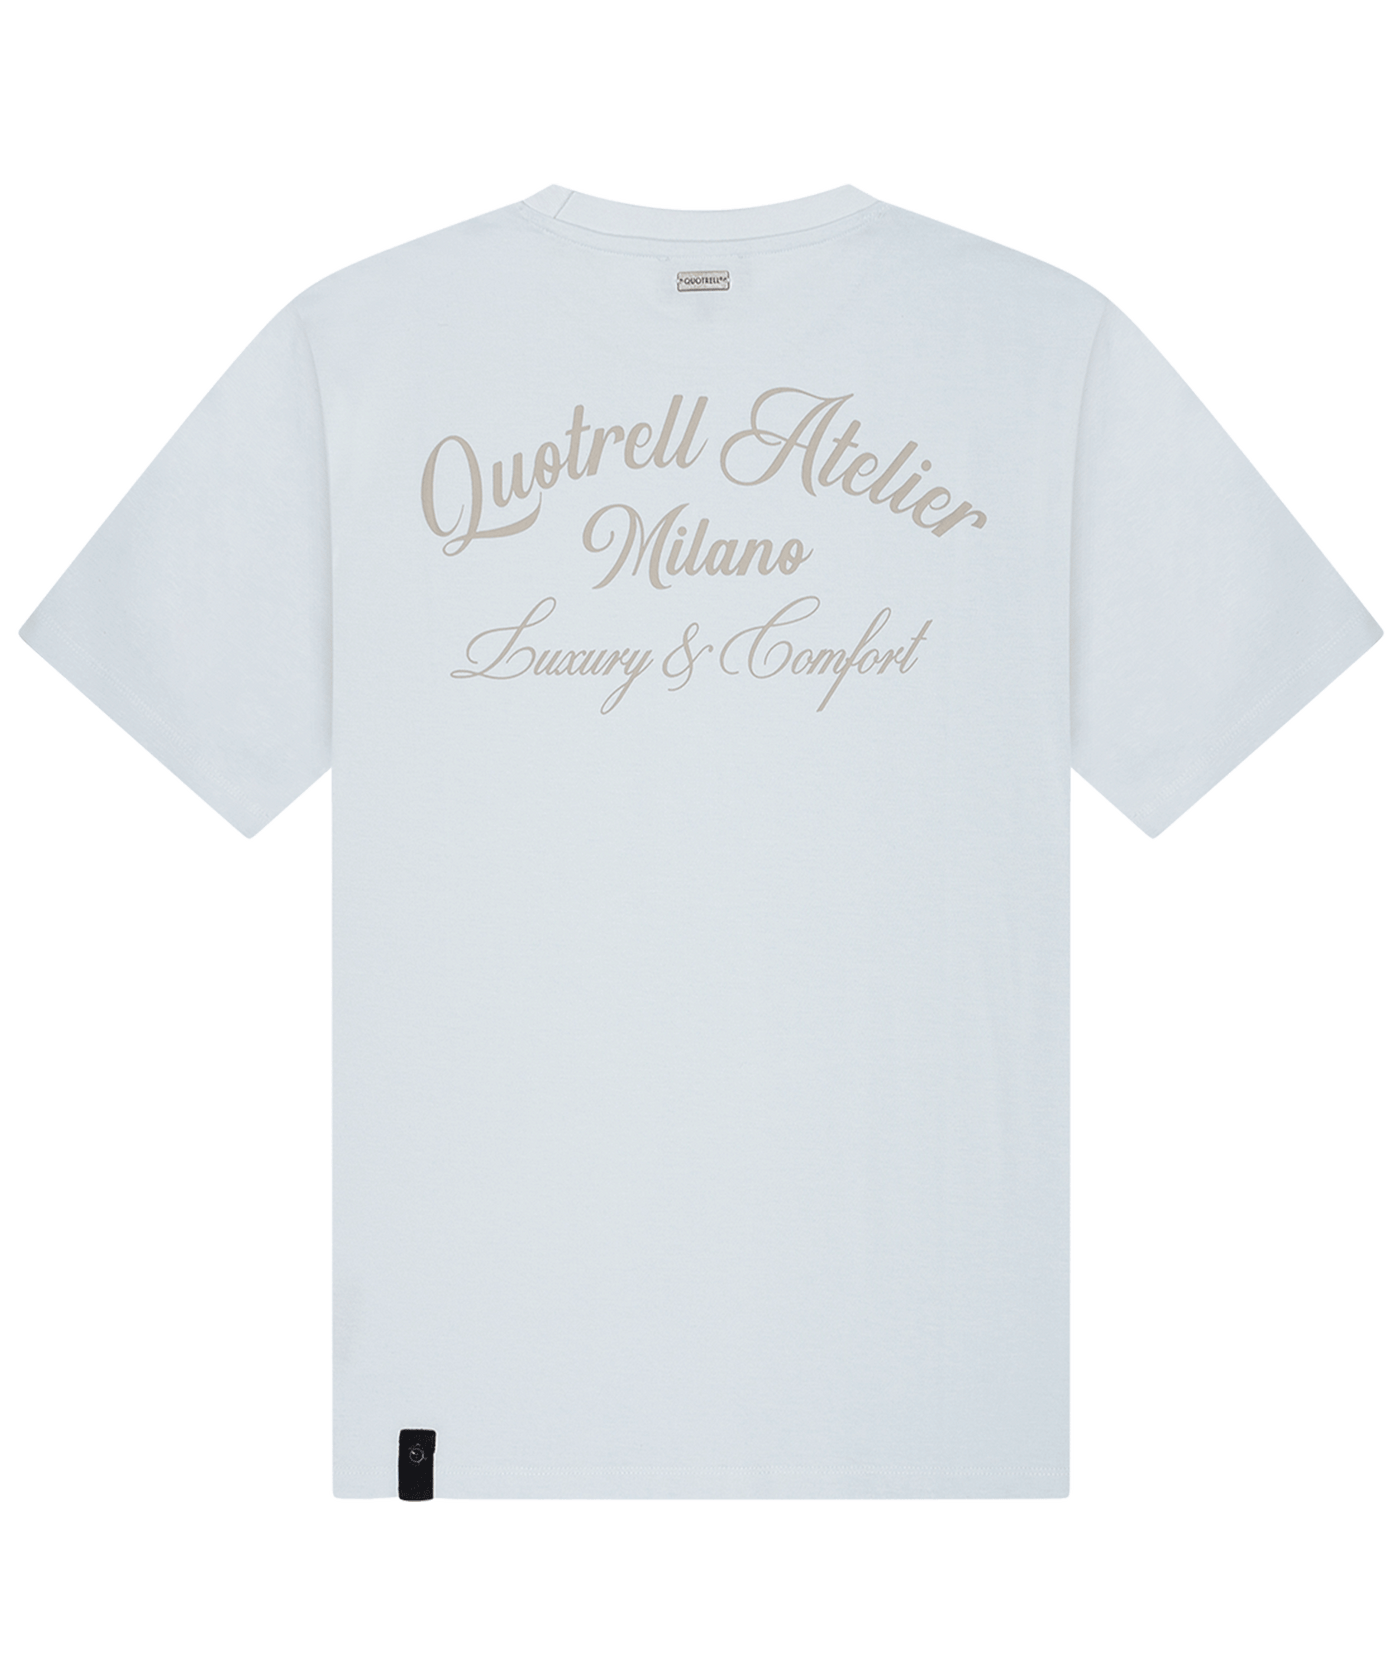 Quotrell - Atelier Milano - T-shirt - Light Blue/grey